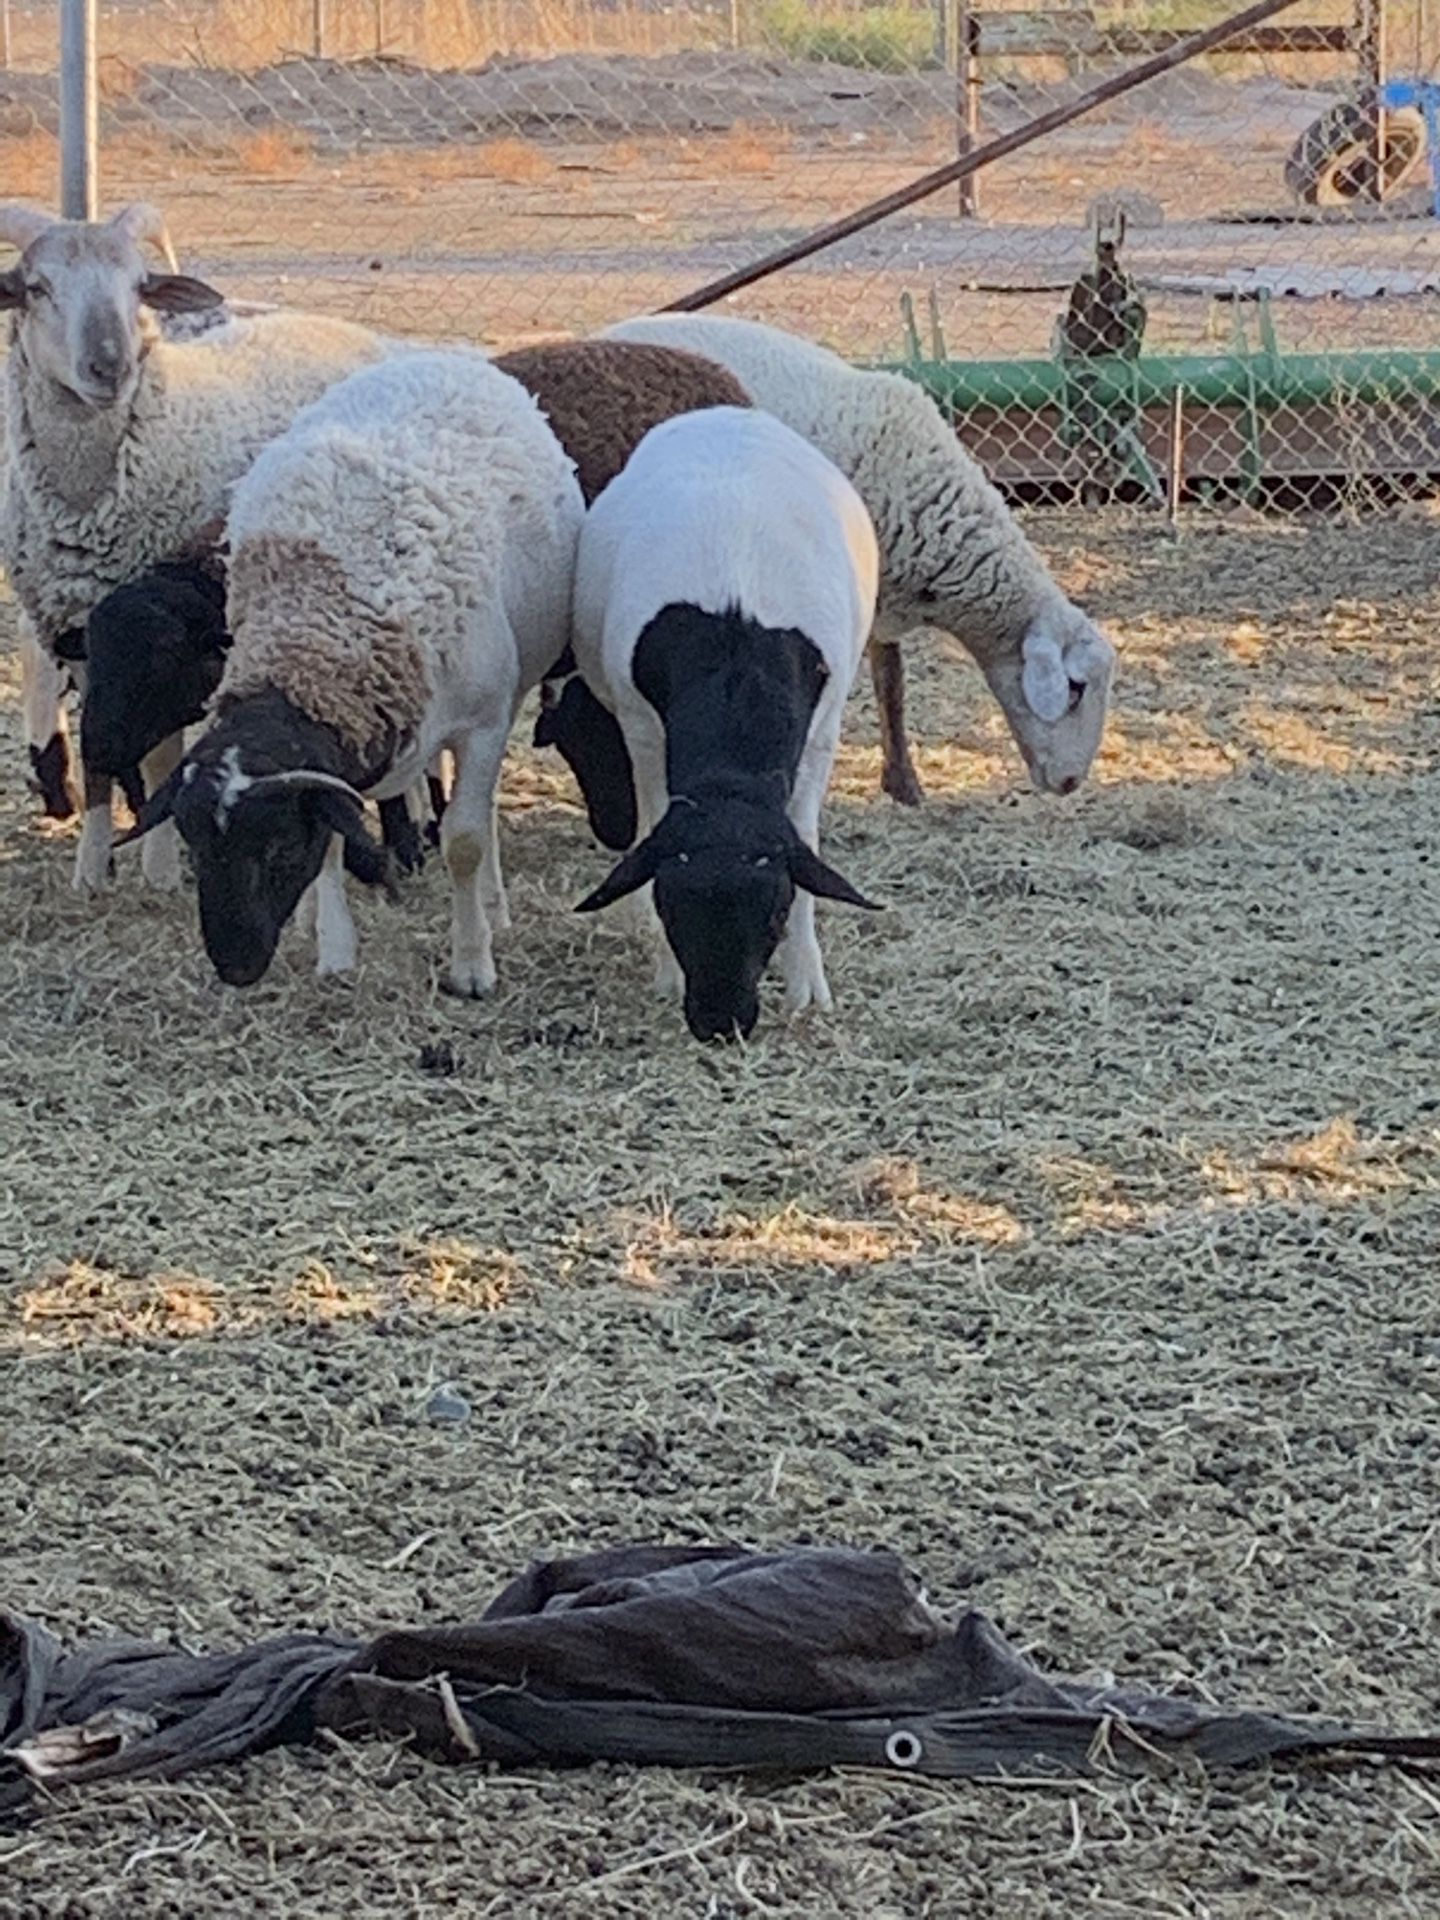 Sheep,Dorper,livestock,farm animal,hay